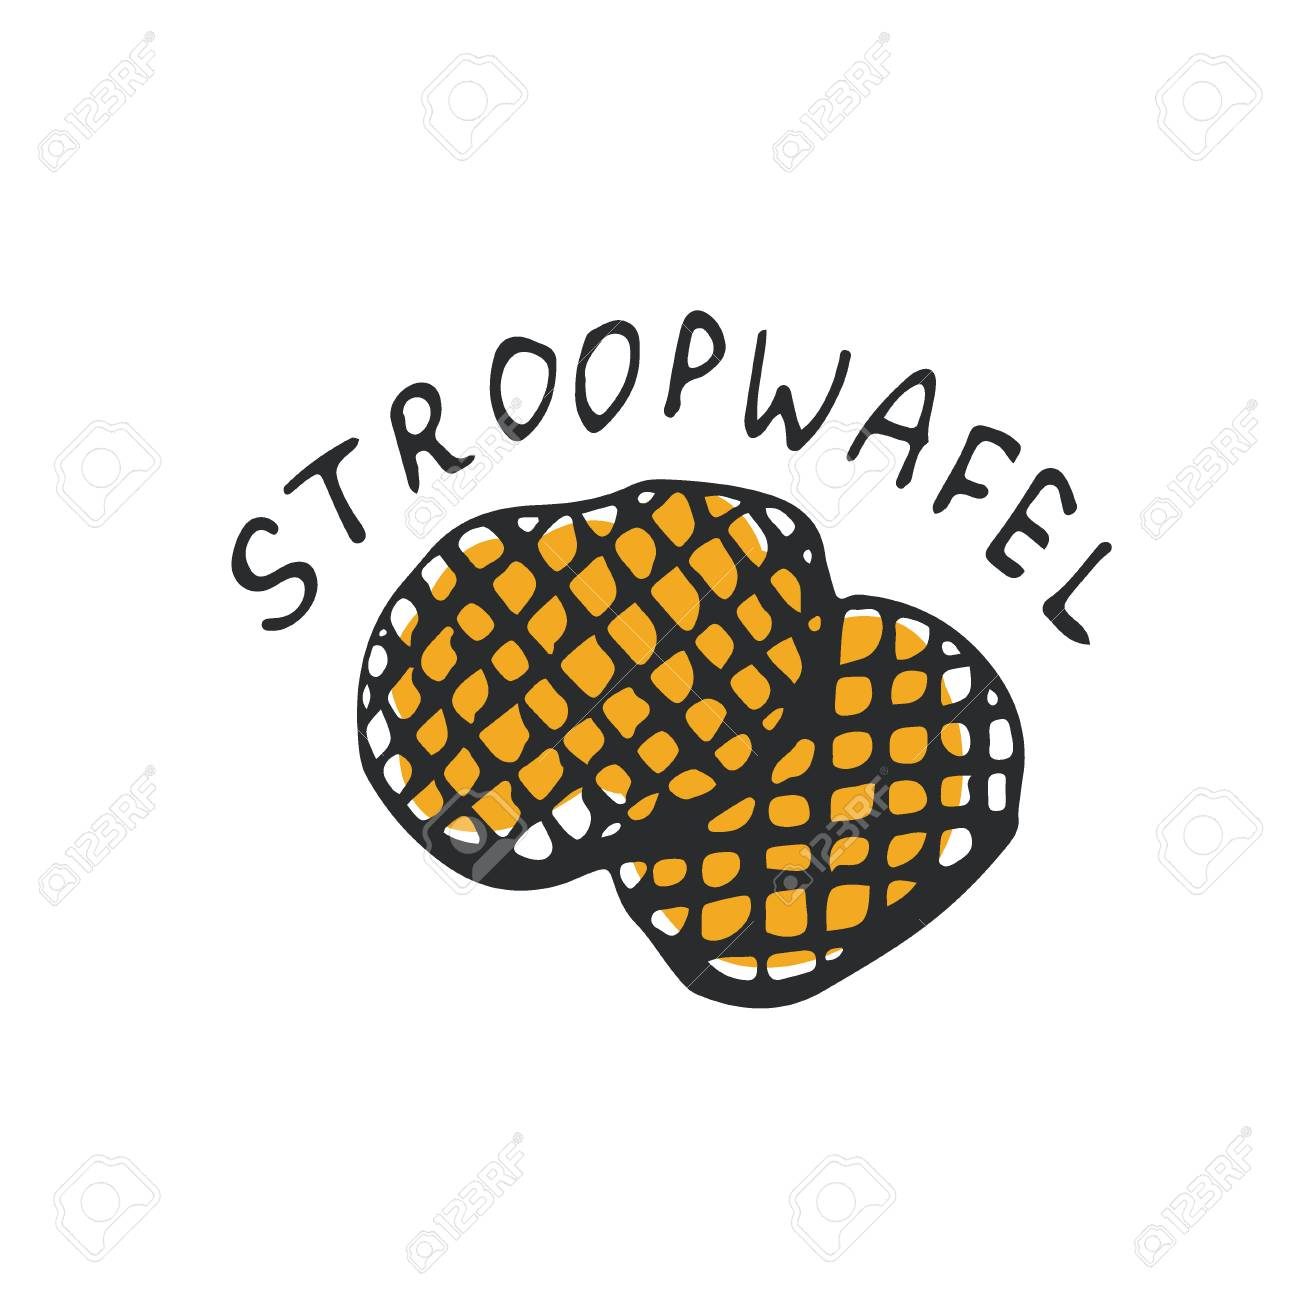 An illustration of stroopwaffel